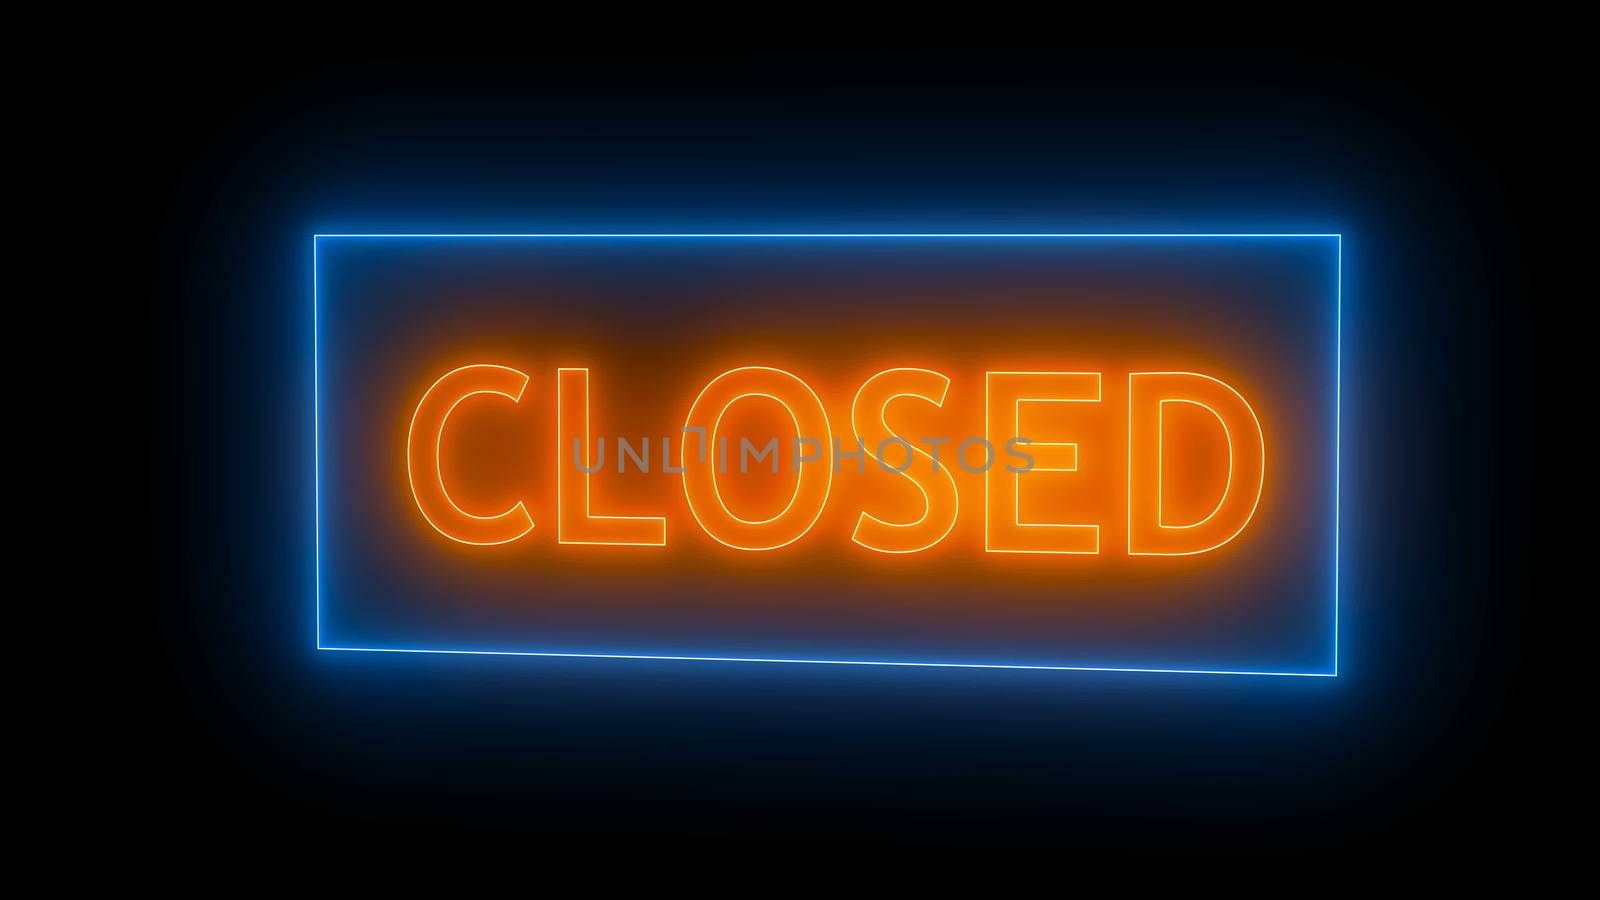 Closed neon sign. Digital illustration. 3d rendering